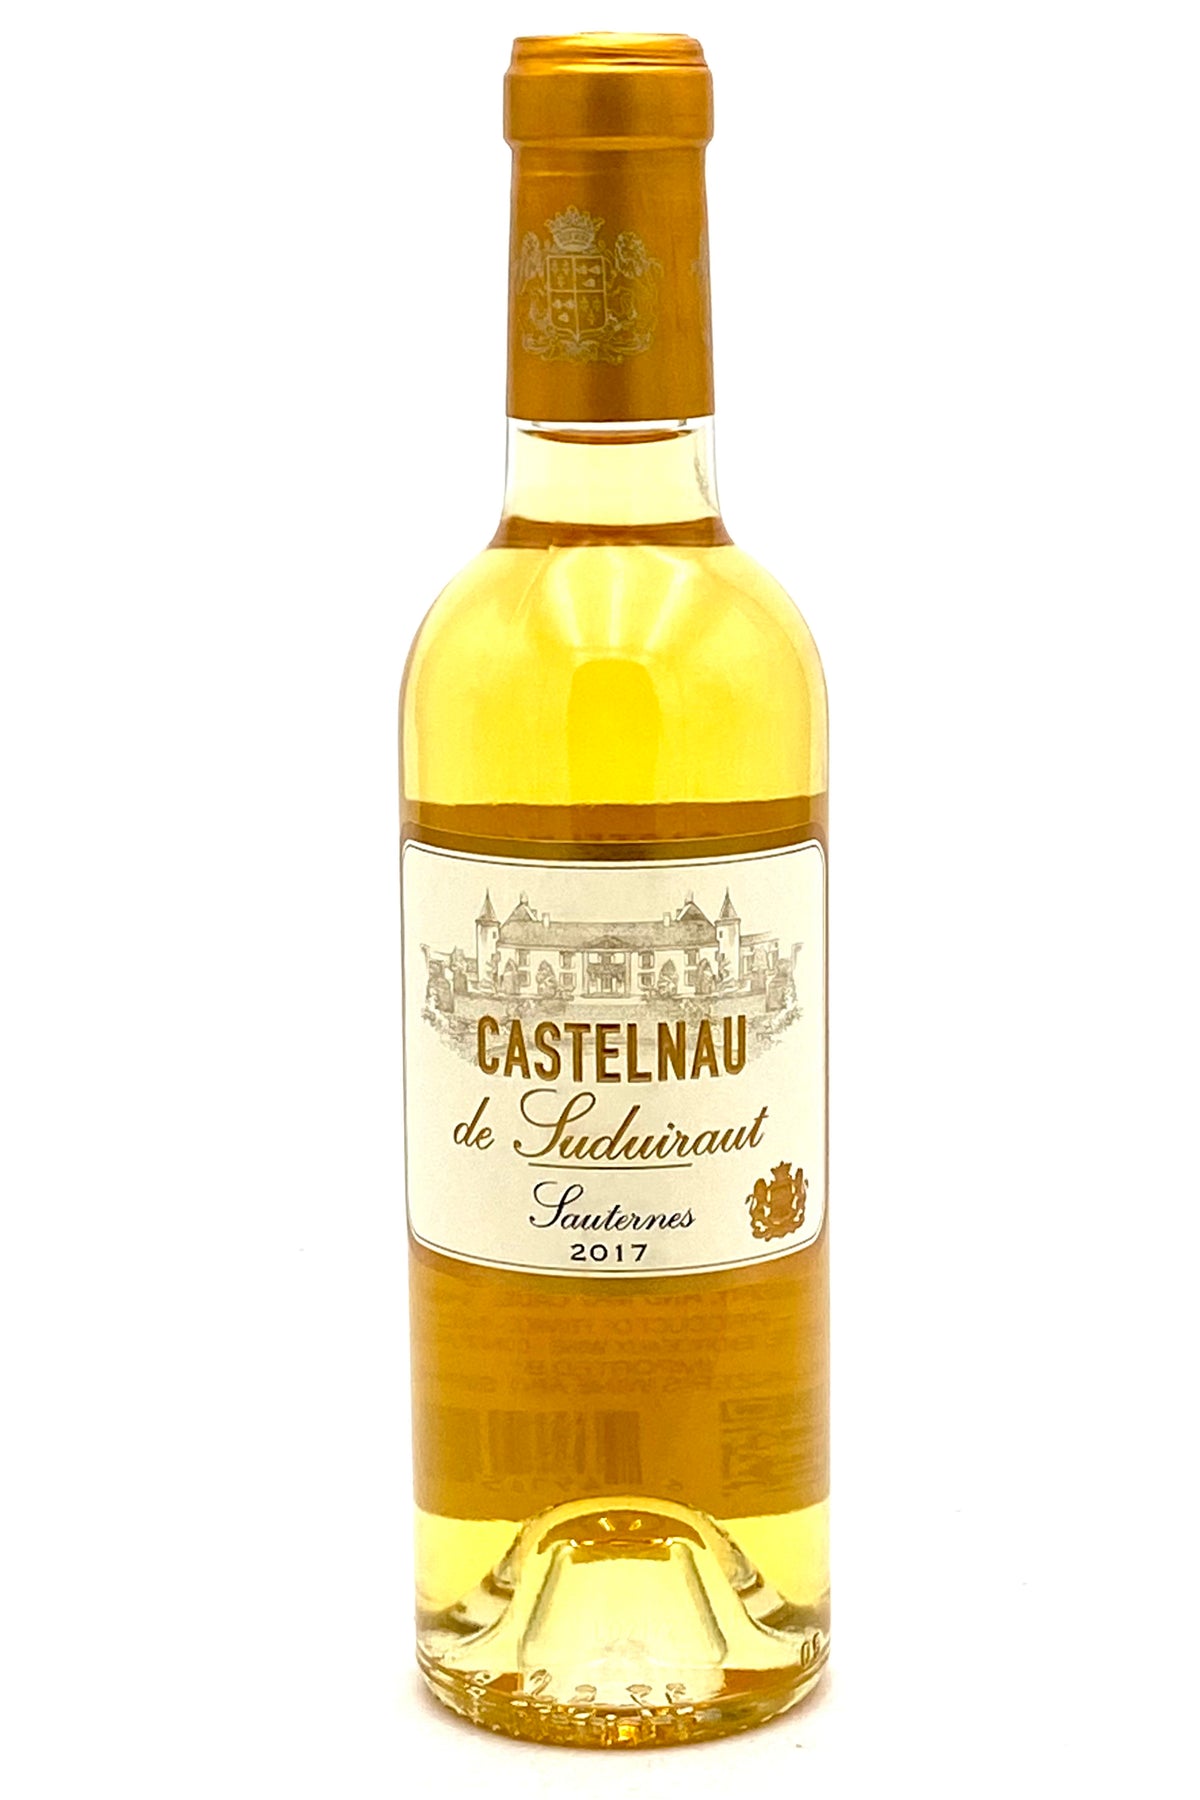 Castelnau de Suduiraut 2017 Sauternes 375 ml